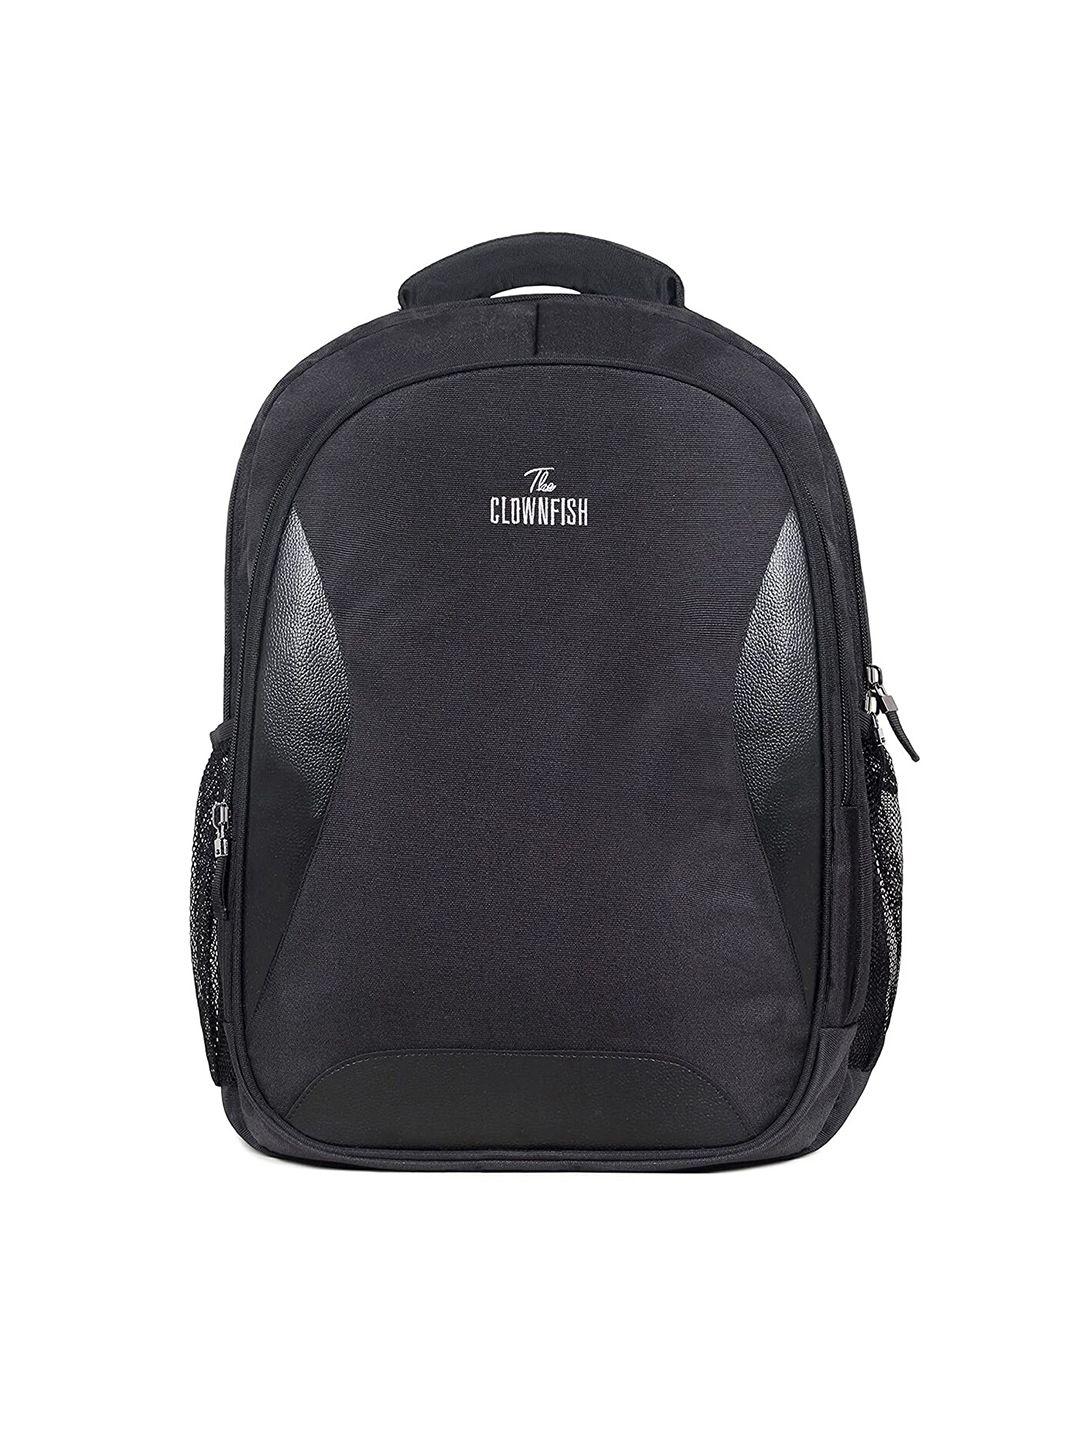 the clownfish unisex black laptop bag